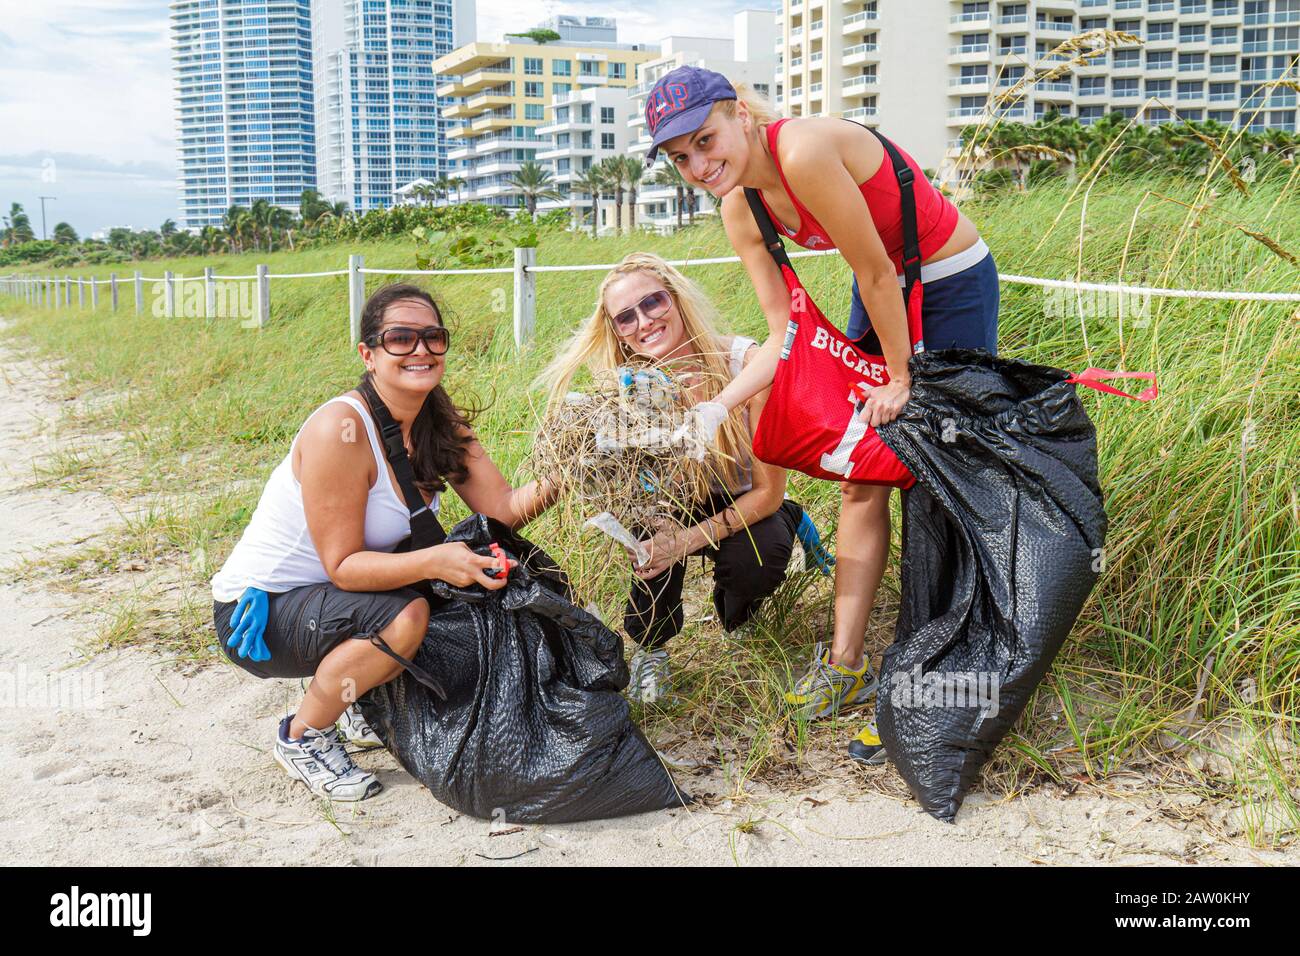 Miami Beach Florida,Coastal Cleanup Day,étudiants bénévoles bénévoles bénévoles travailleurs du travail, travail d'équipe travaillant ensemble pour aider Banque D'Images